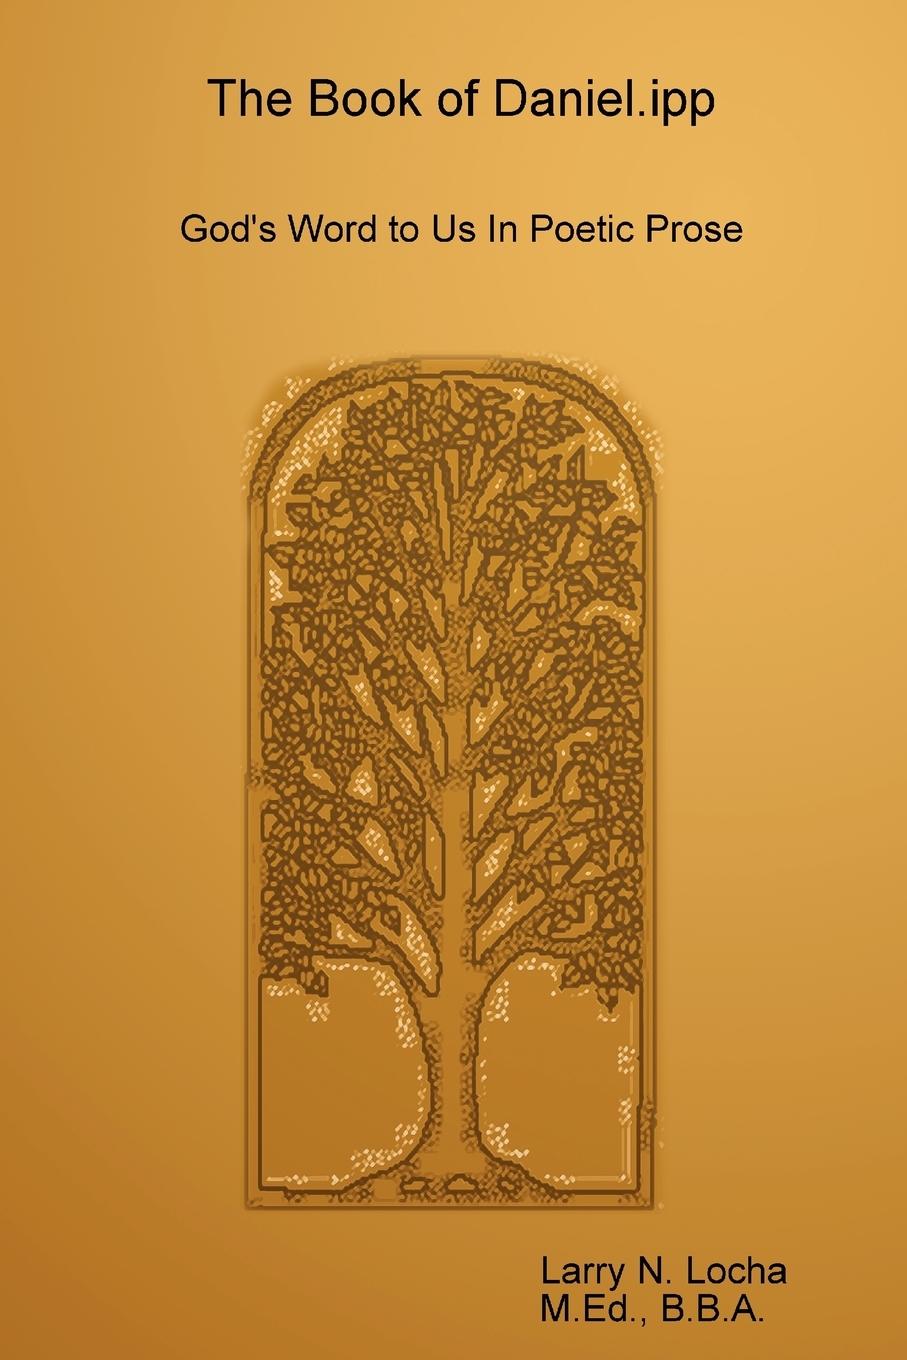 The Book of Daniel.Ipp, God s Word to Us in Poetic Prose - Locha, Larry